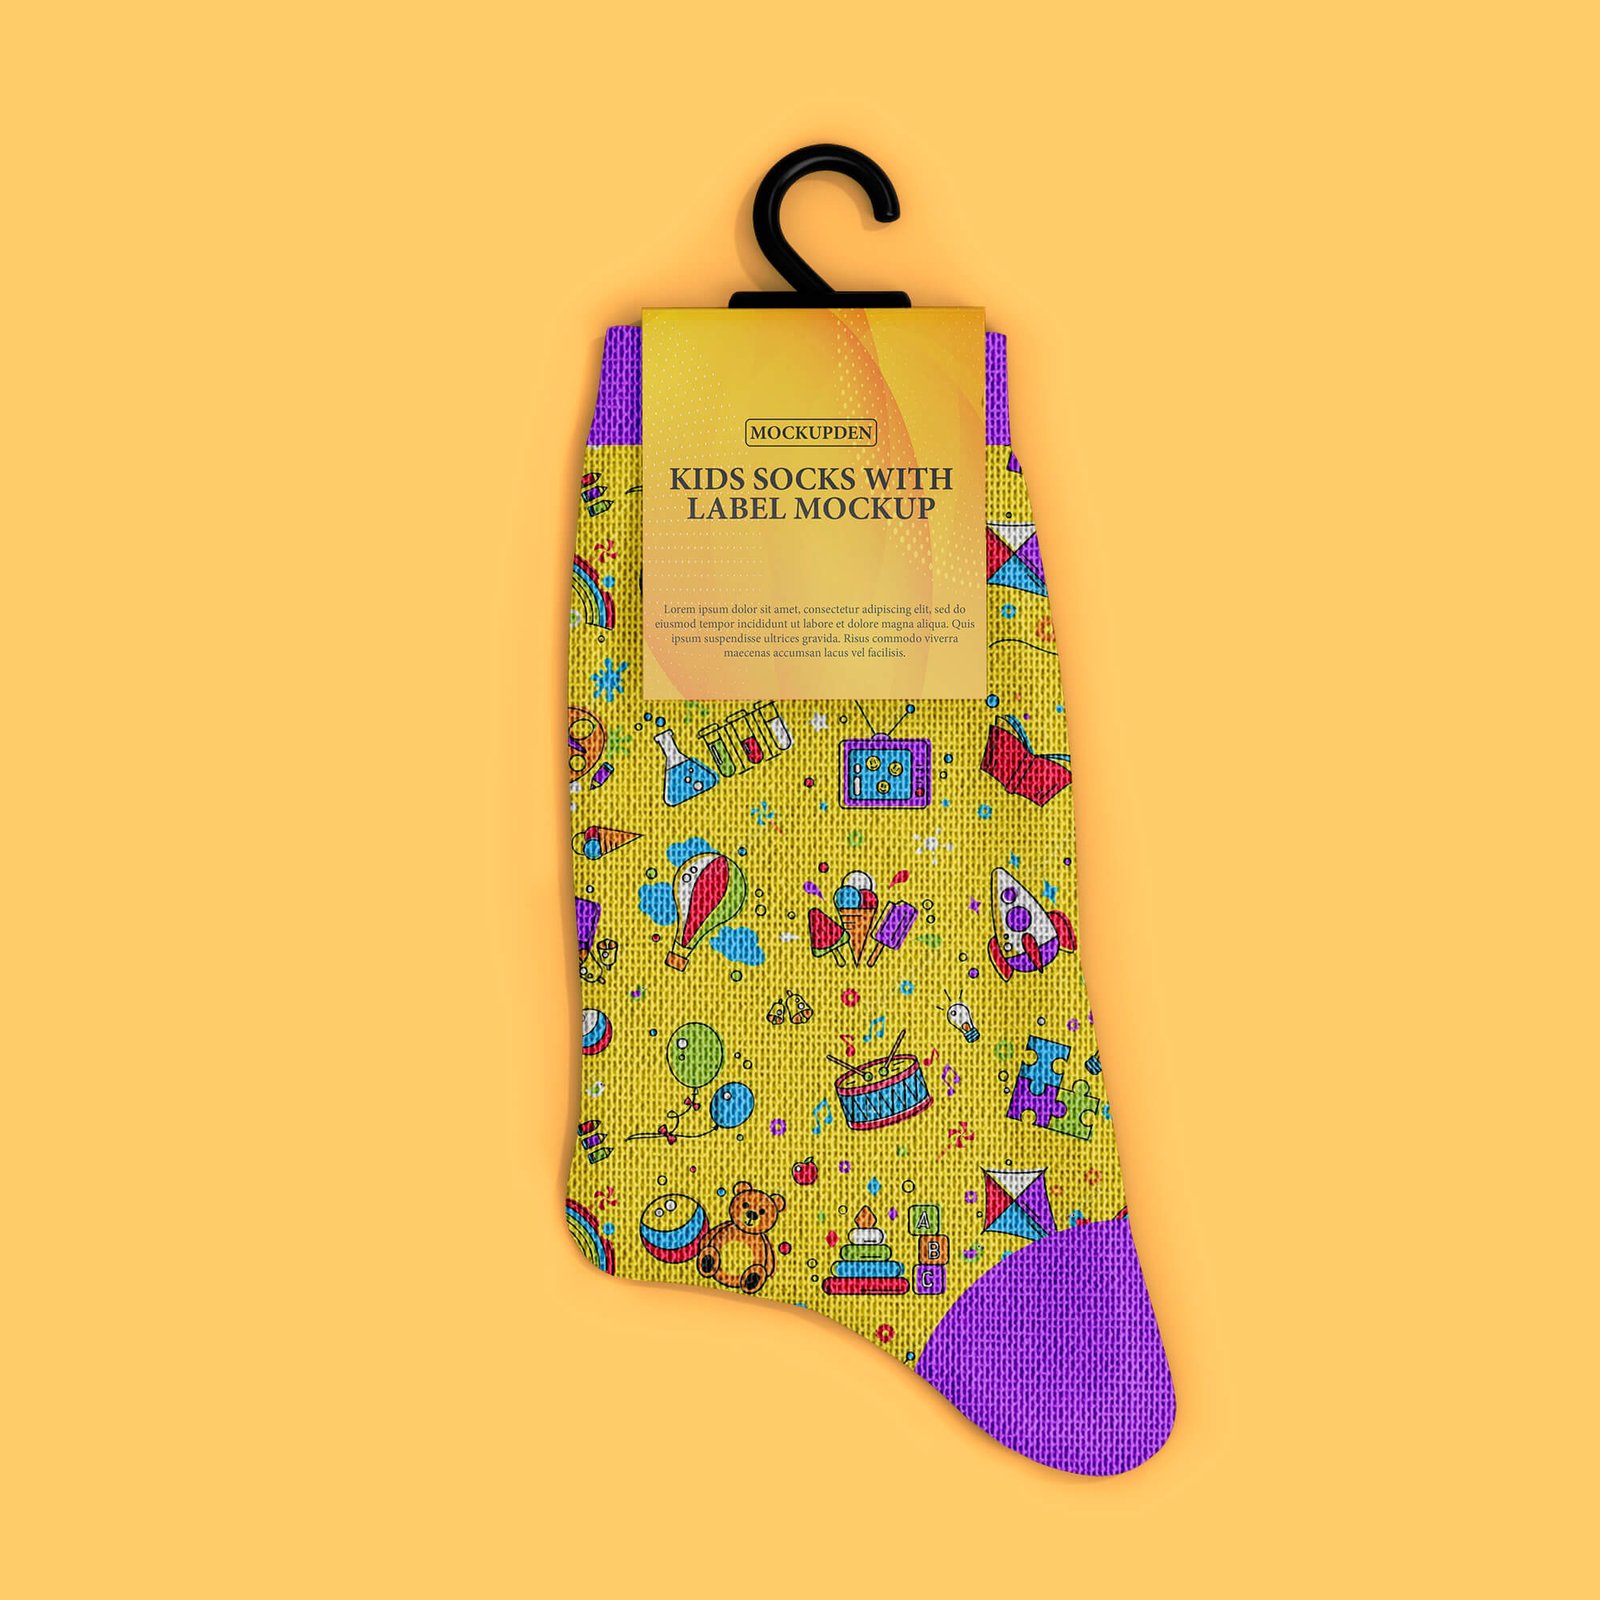 Design Free Kids Socks With Label Mockup PSD Template